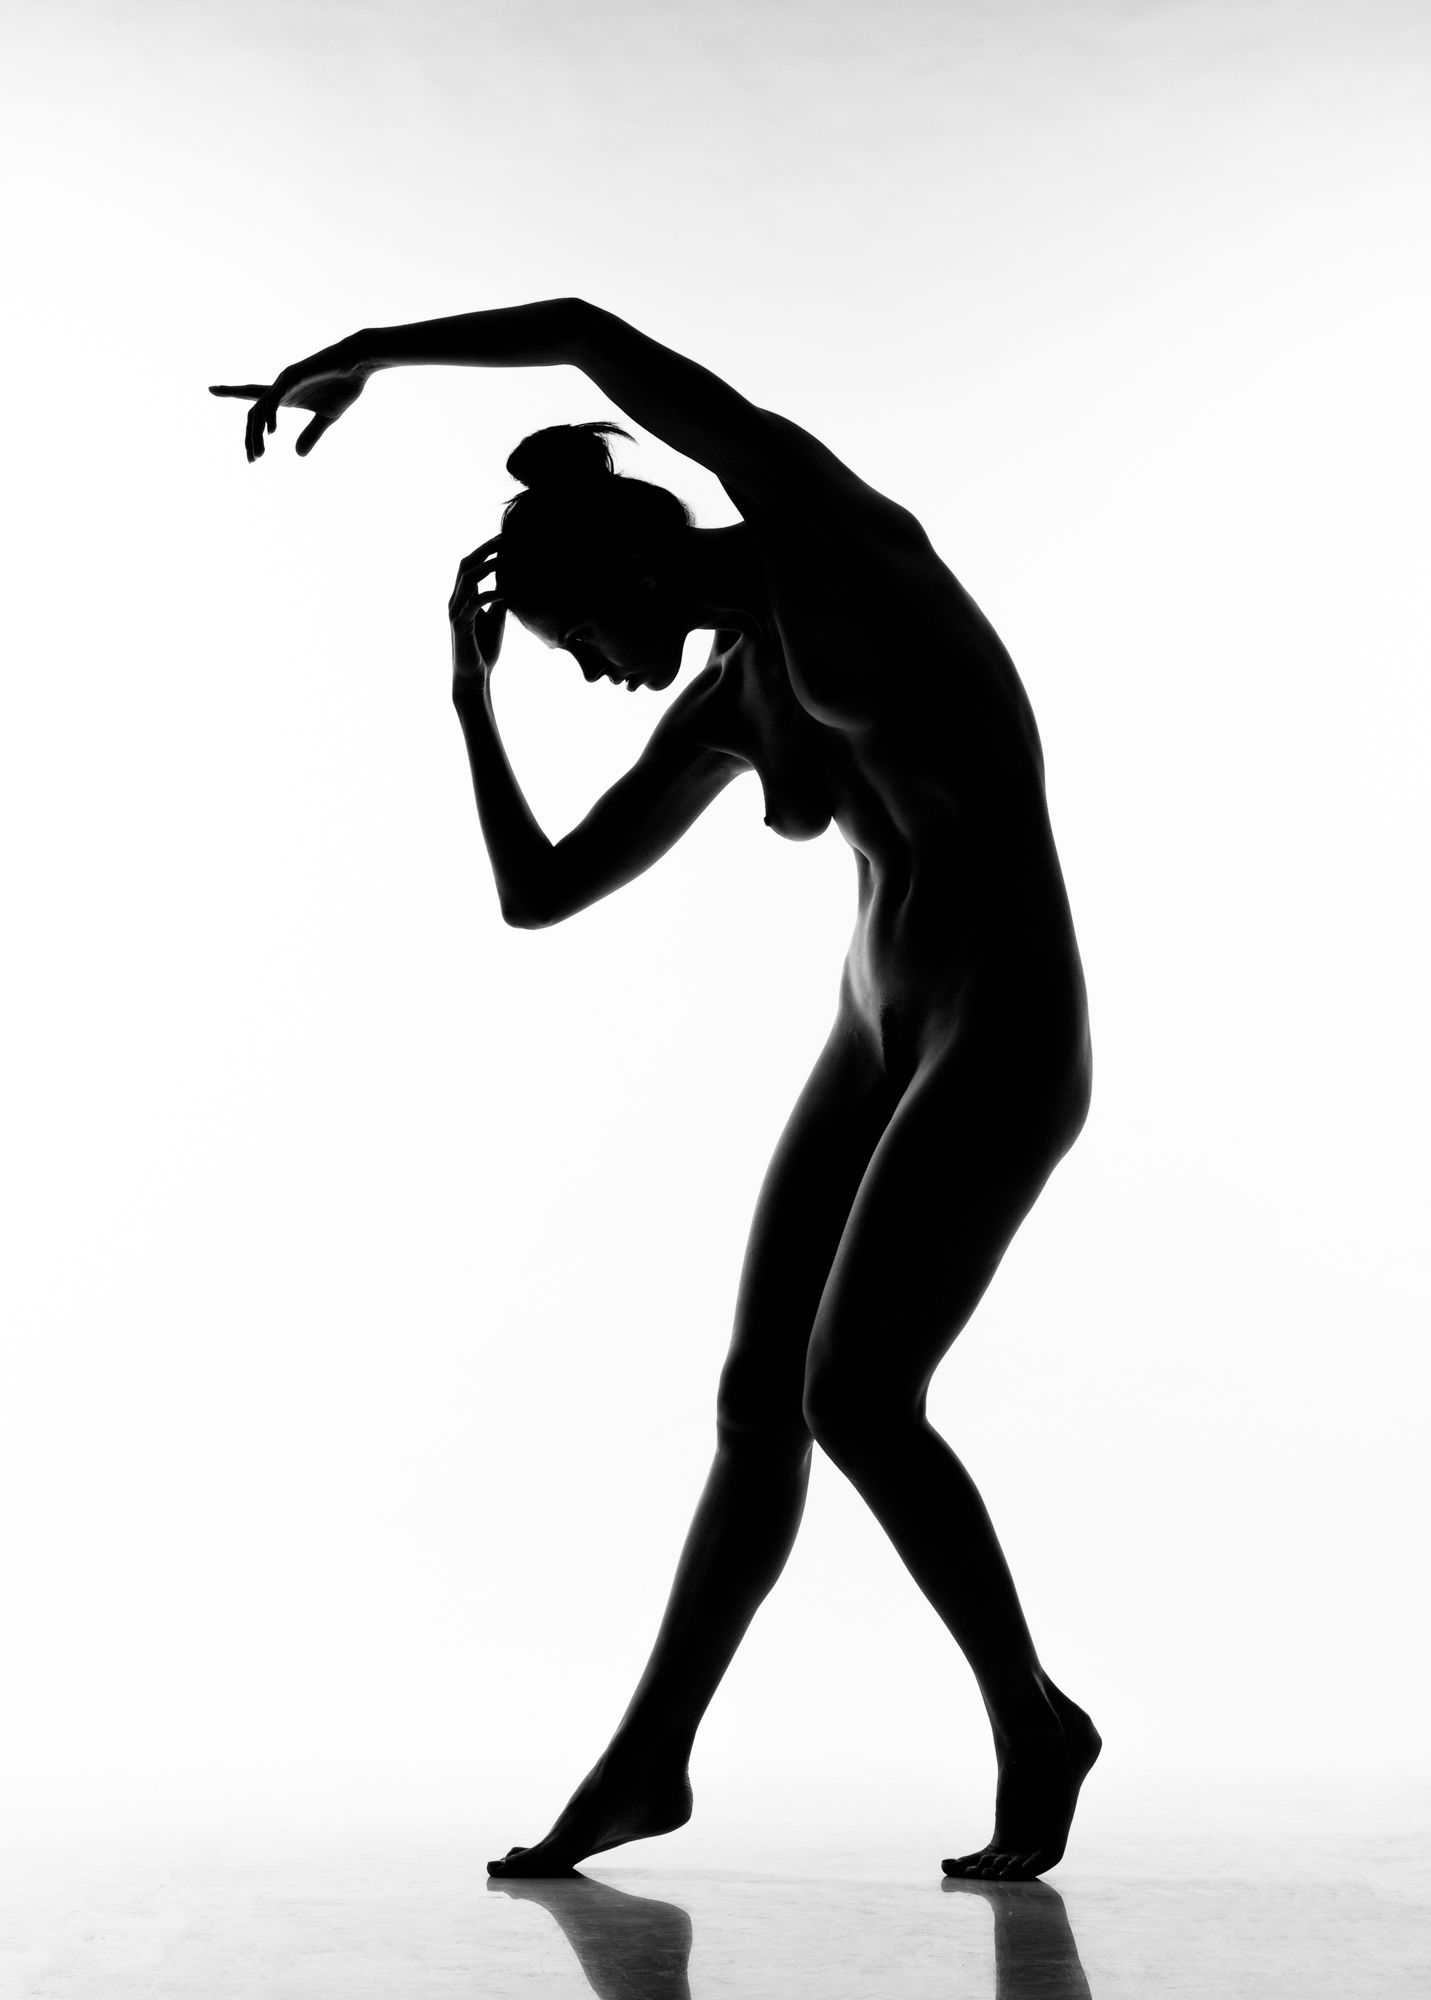 Nude,figure,hair,strong,light,studio, Rozman Erik